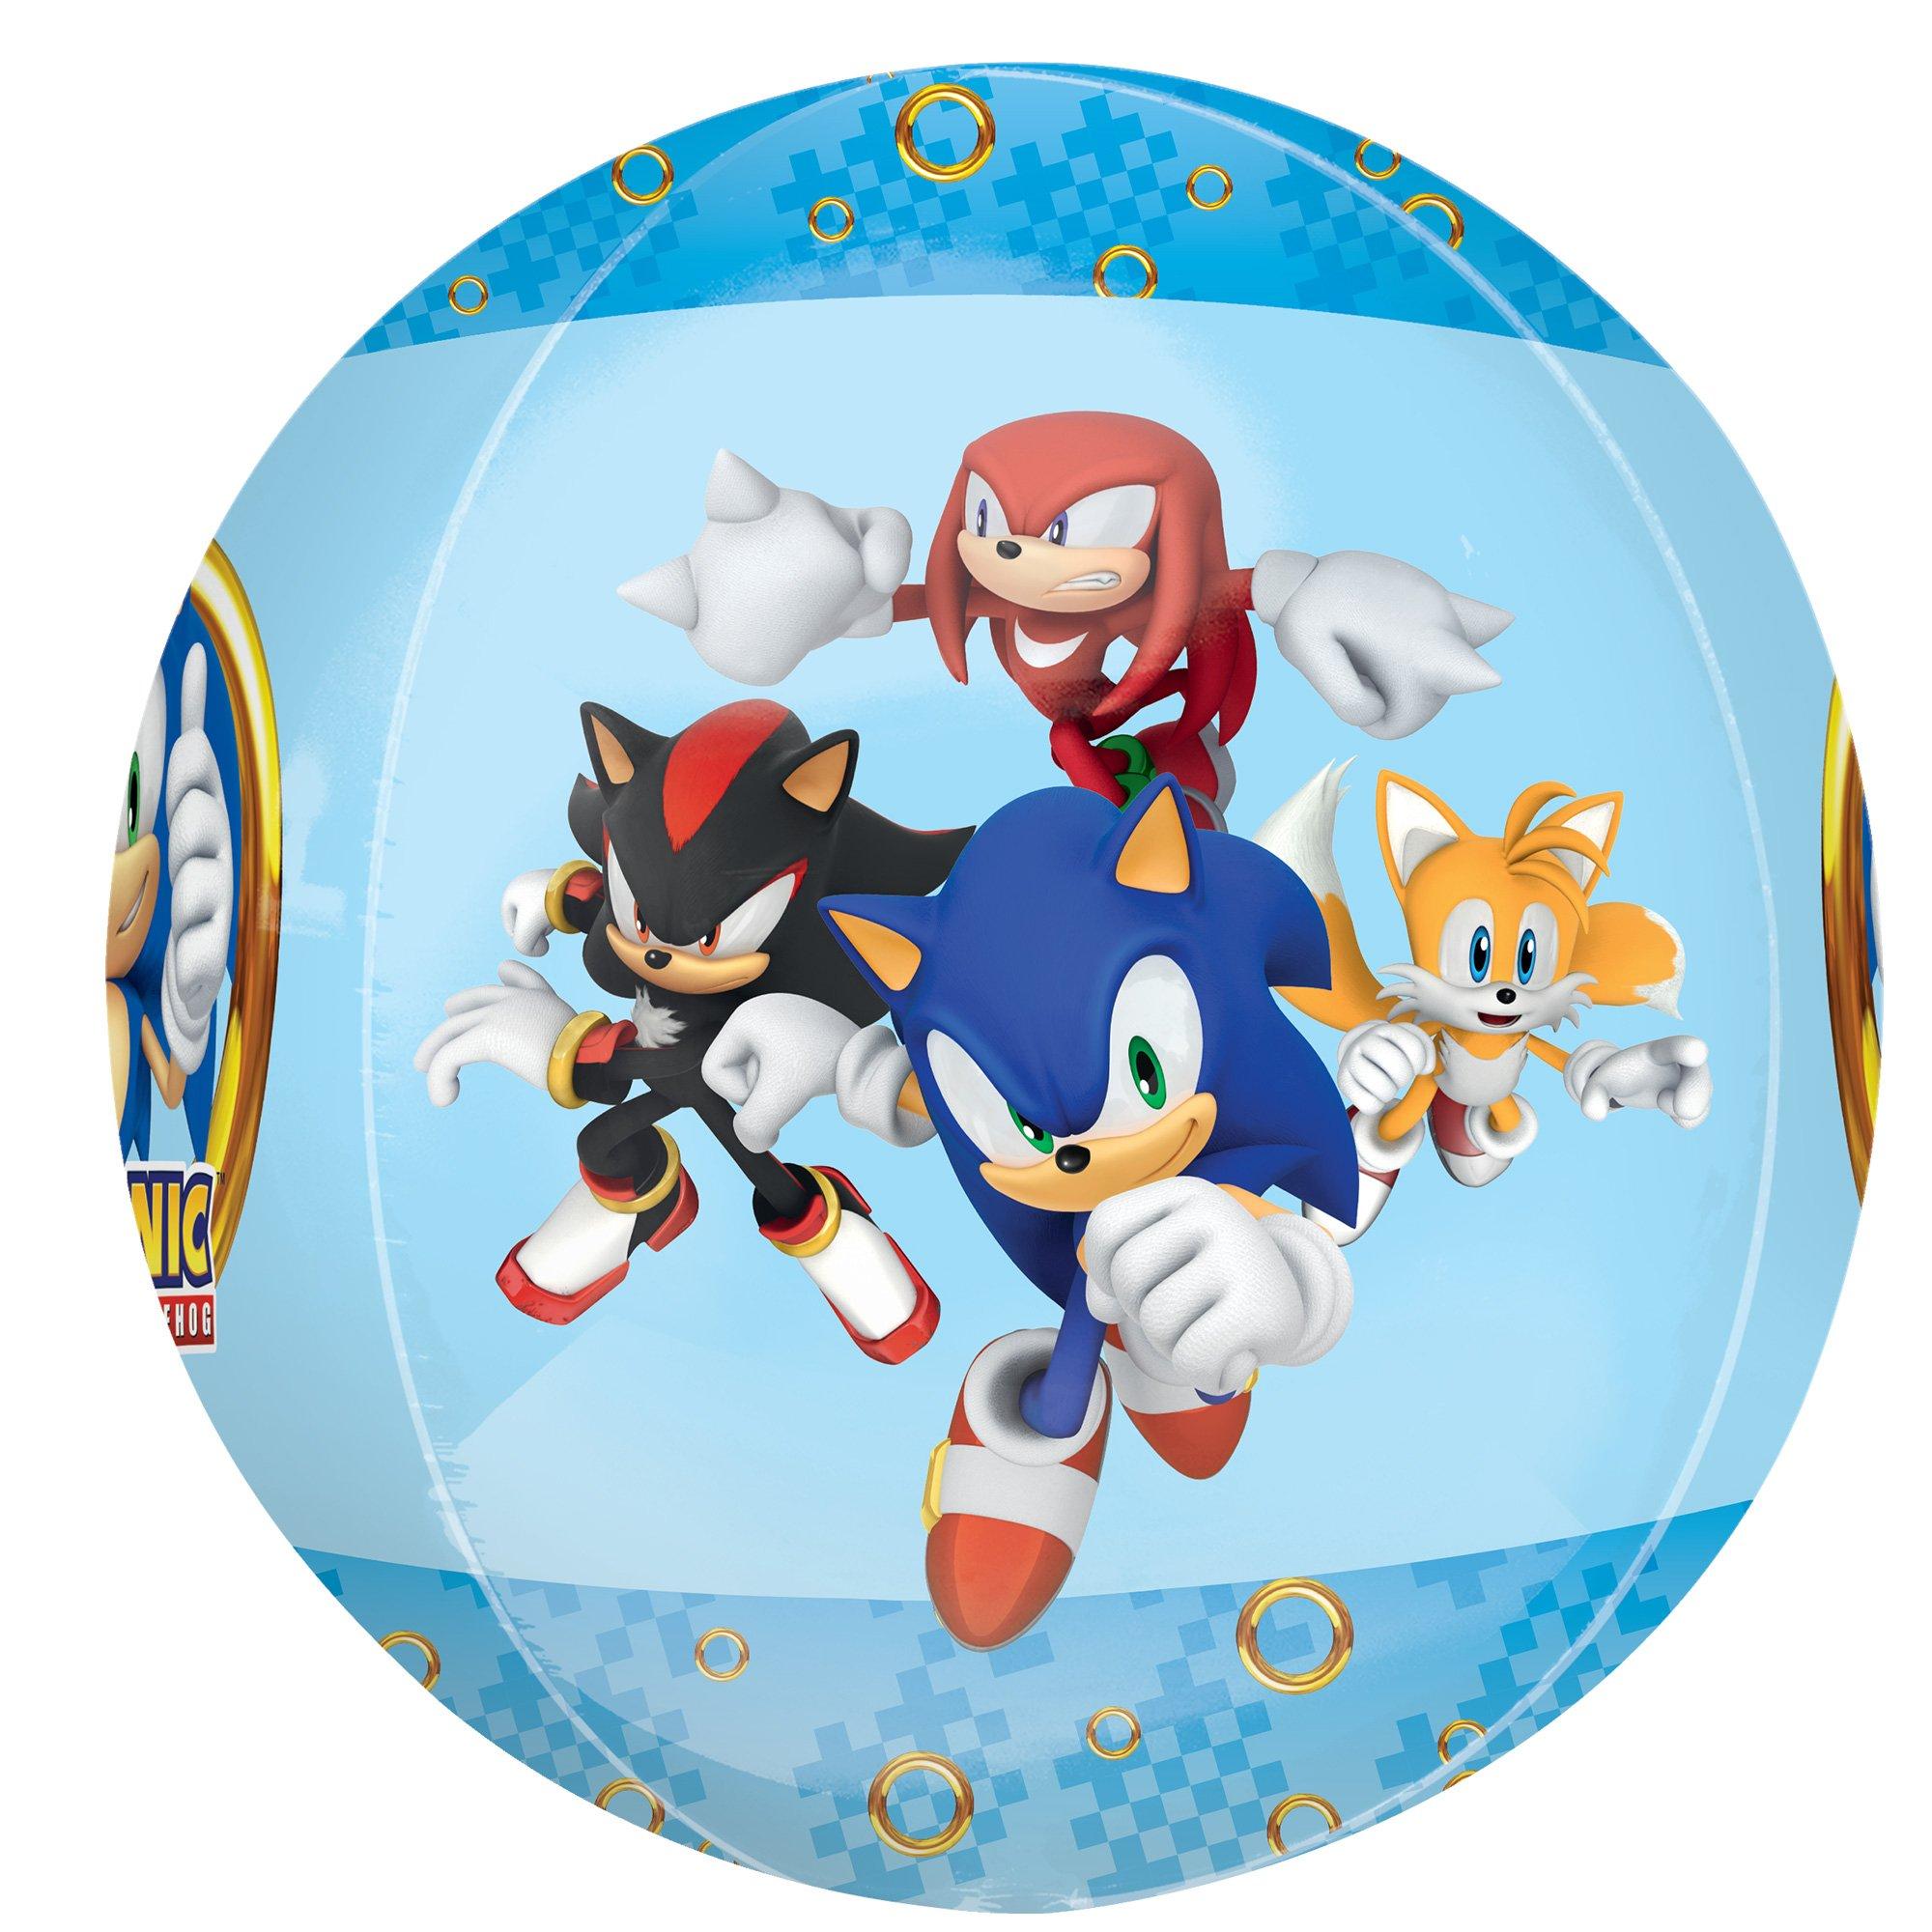 Sonic the Hedgehog 2 Plastic Balloon, 15in x 16in - Orbz